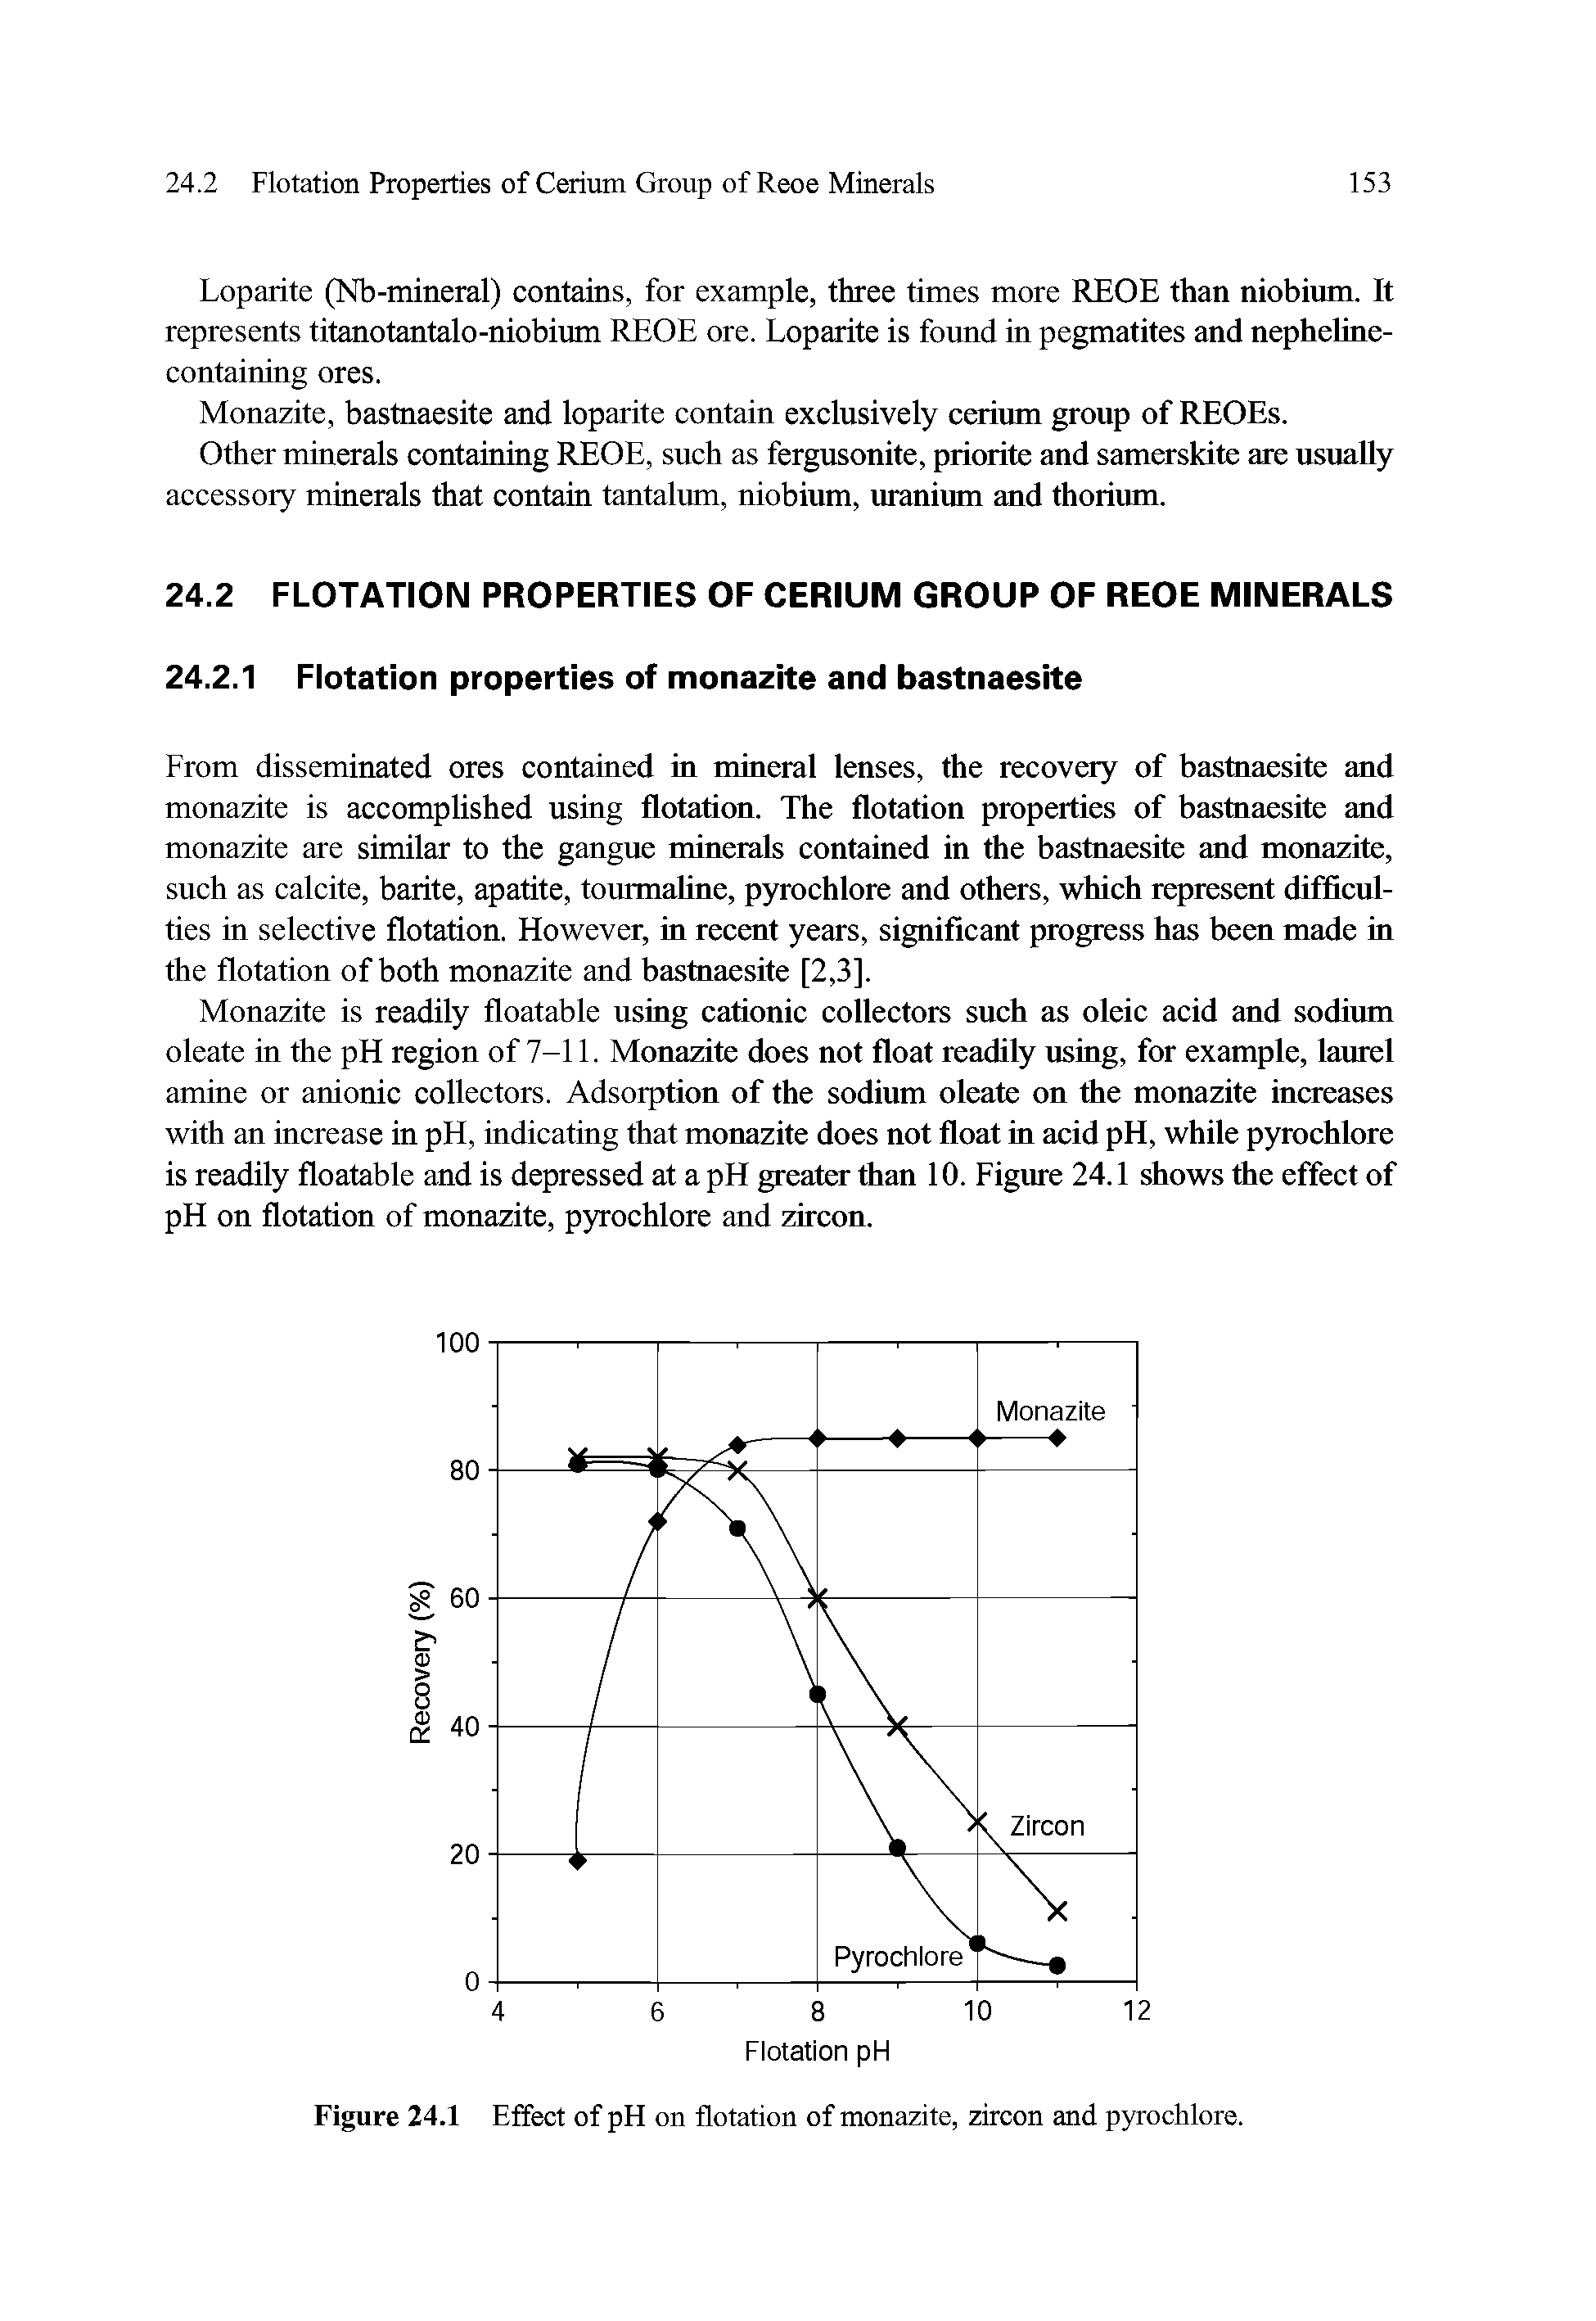 Figure 24.1 Effect of pH on flotation of monazite, zircon and pyrochlore.